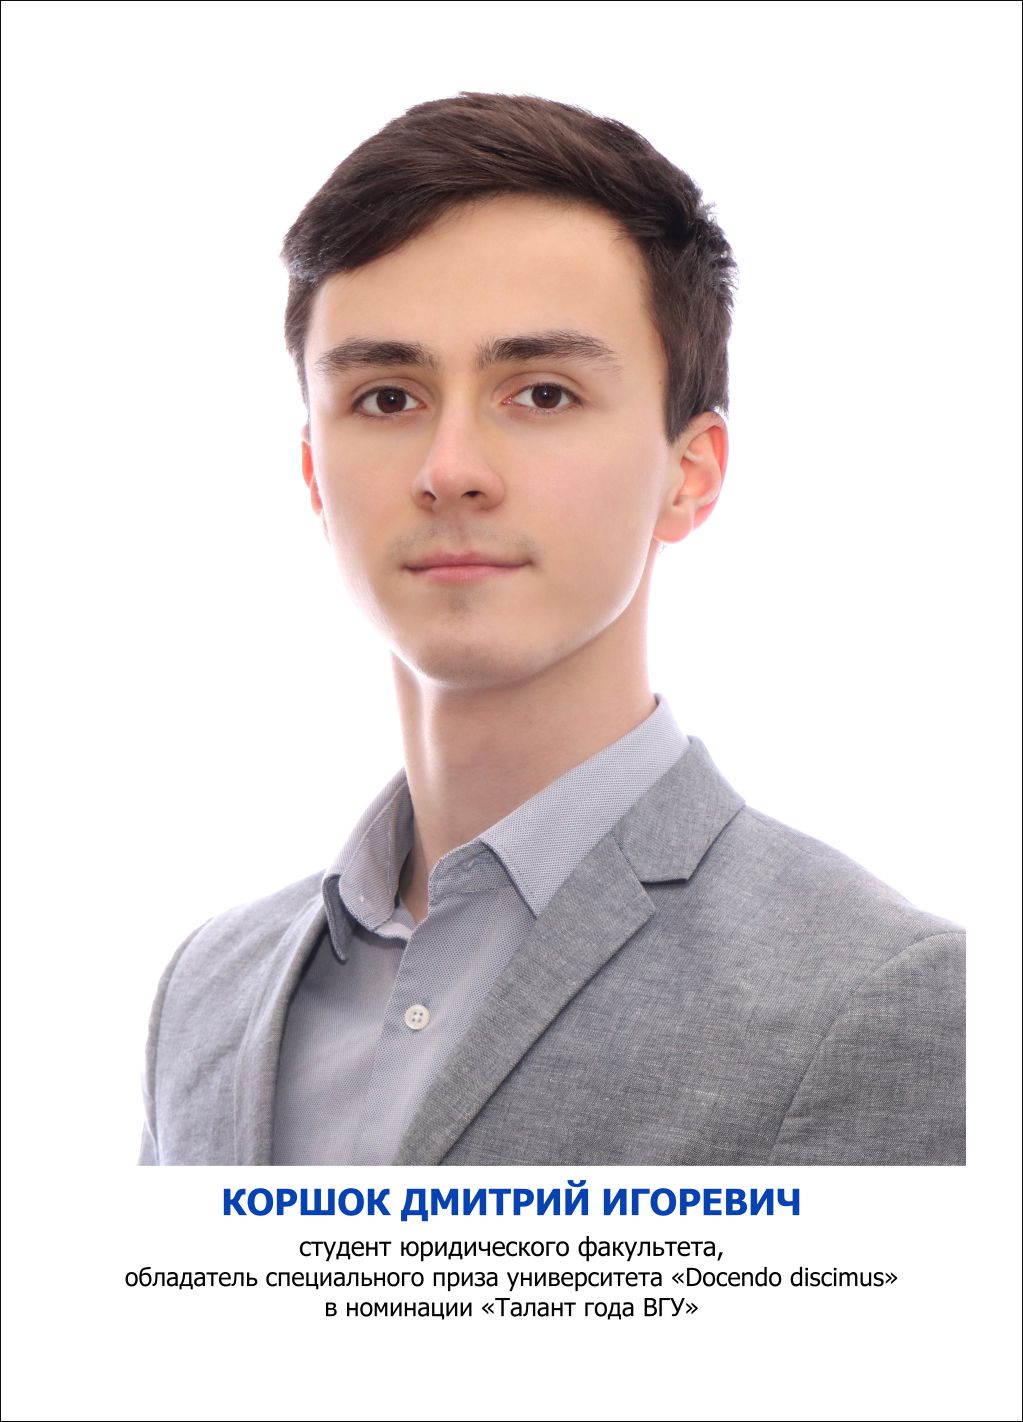 Коршок Дмитрий Игоревич